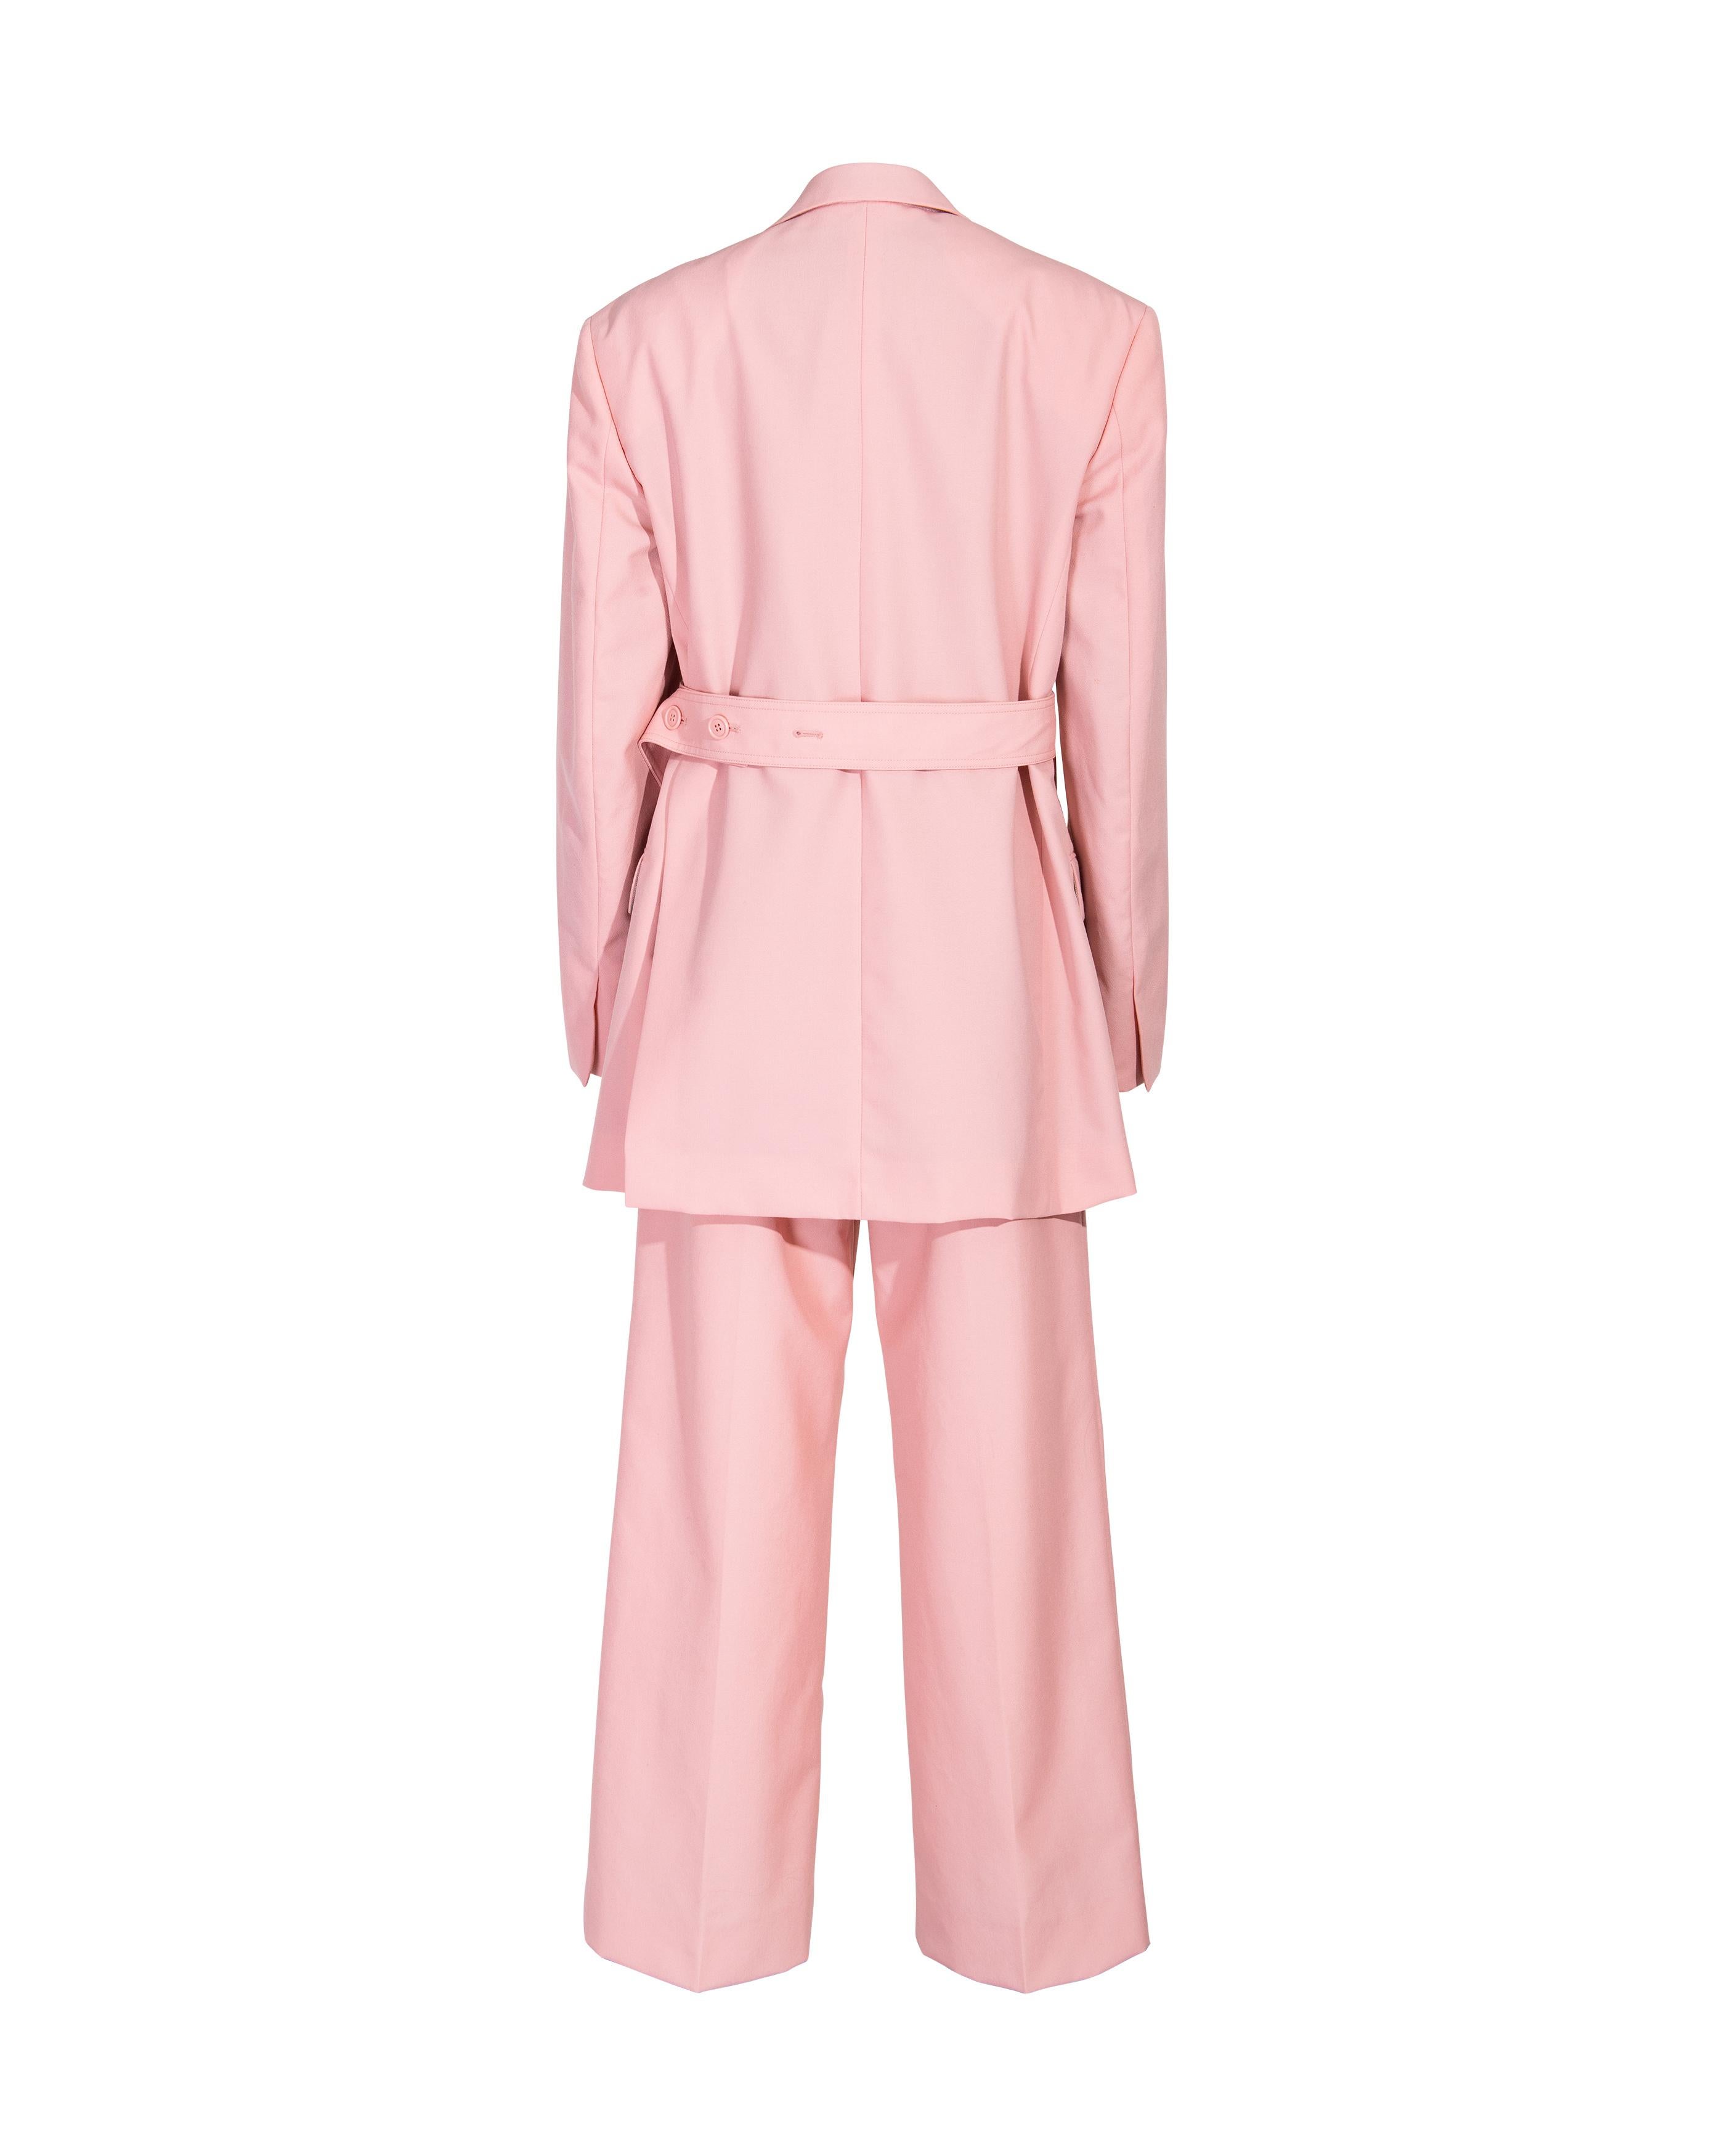 Women's S/S 2018 Old Céline by Phoebe Philo Blush Pink Wool Suit Set